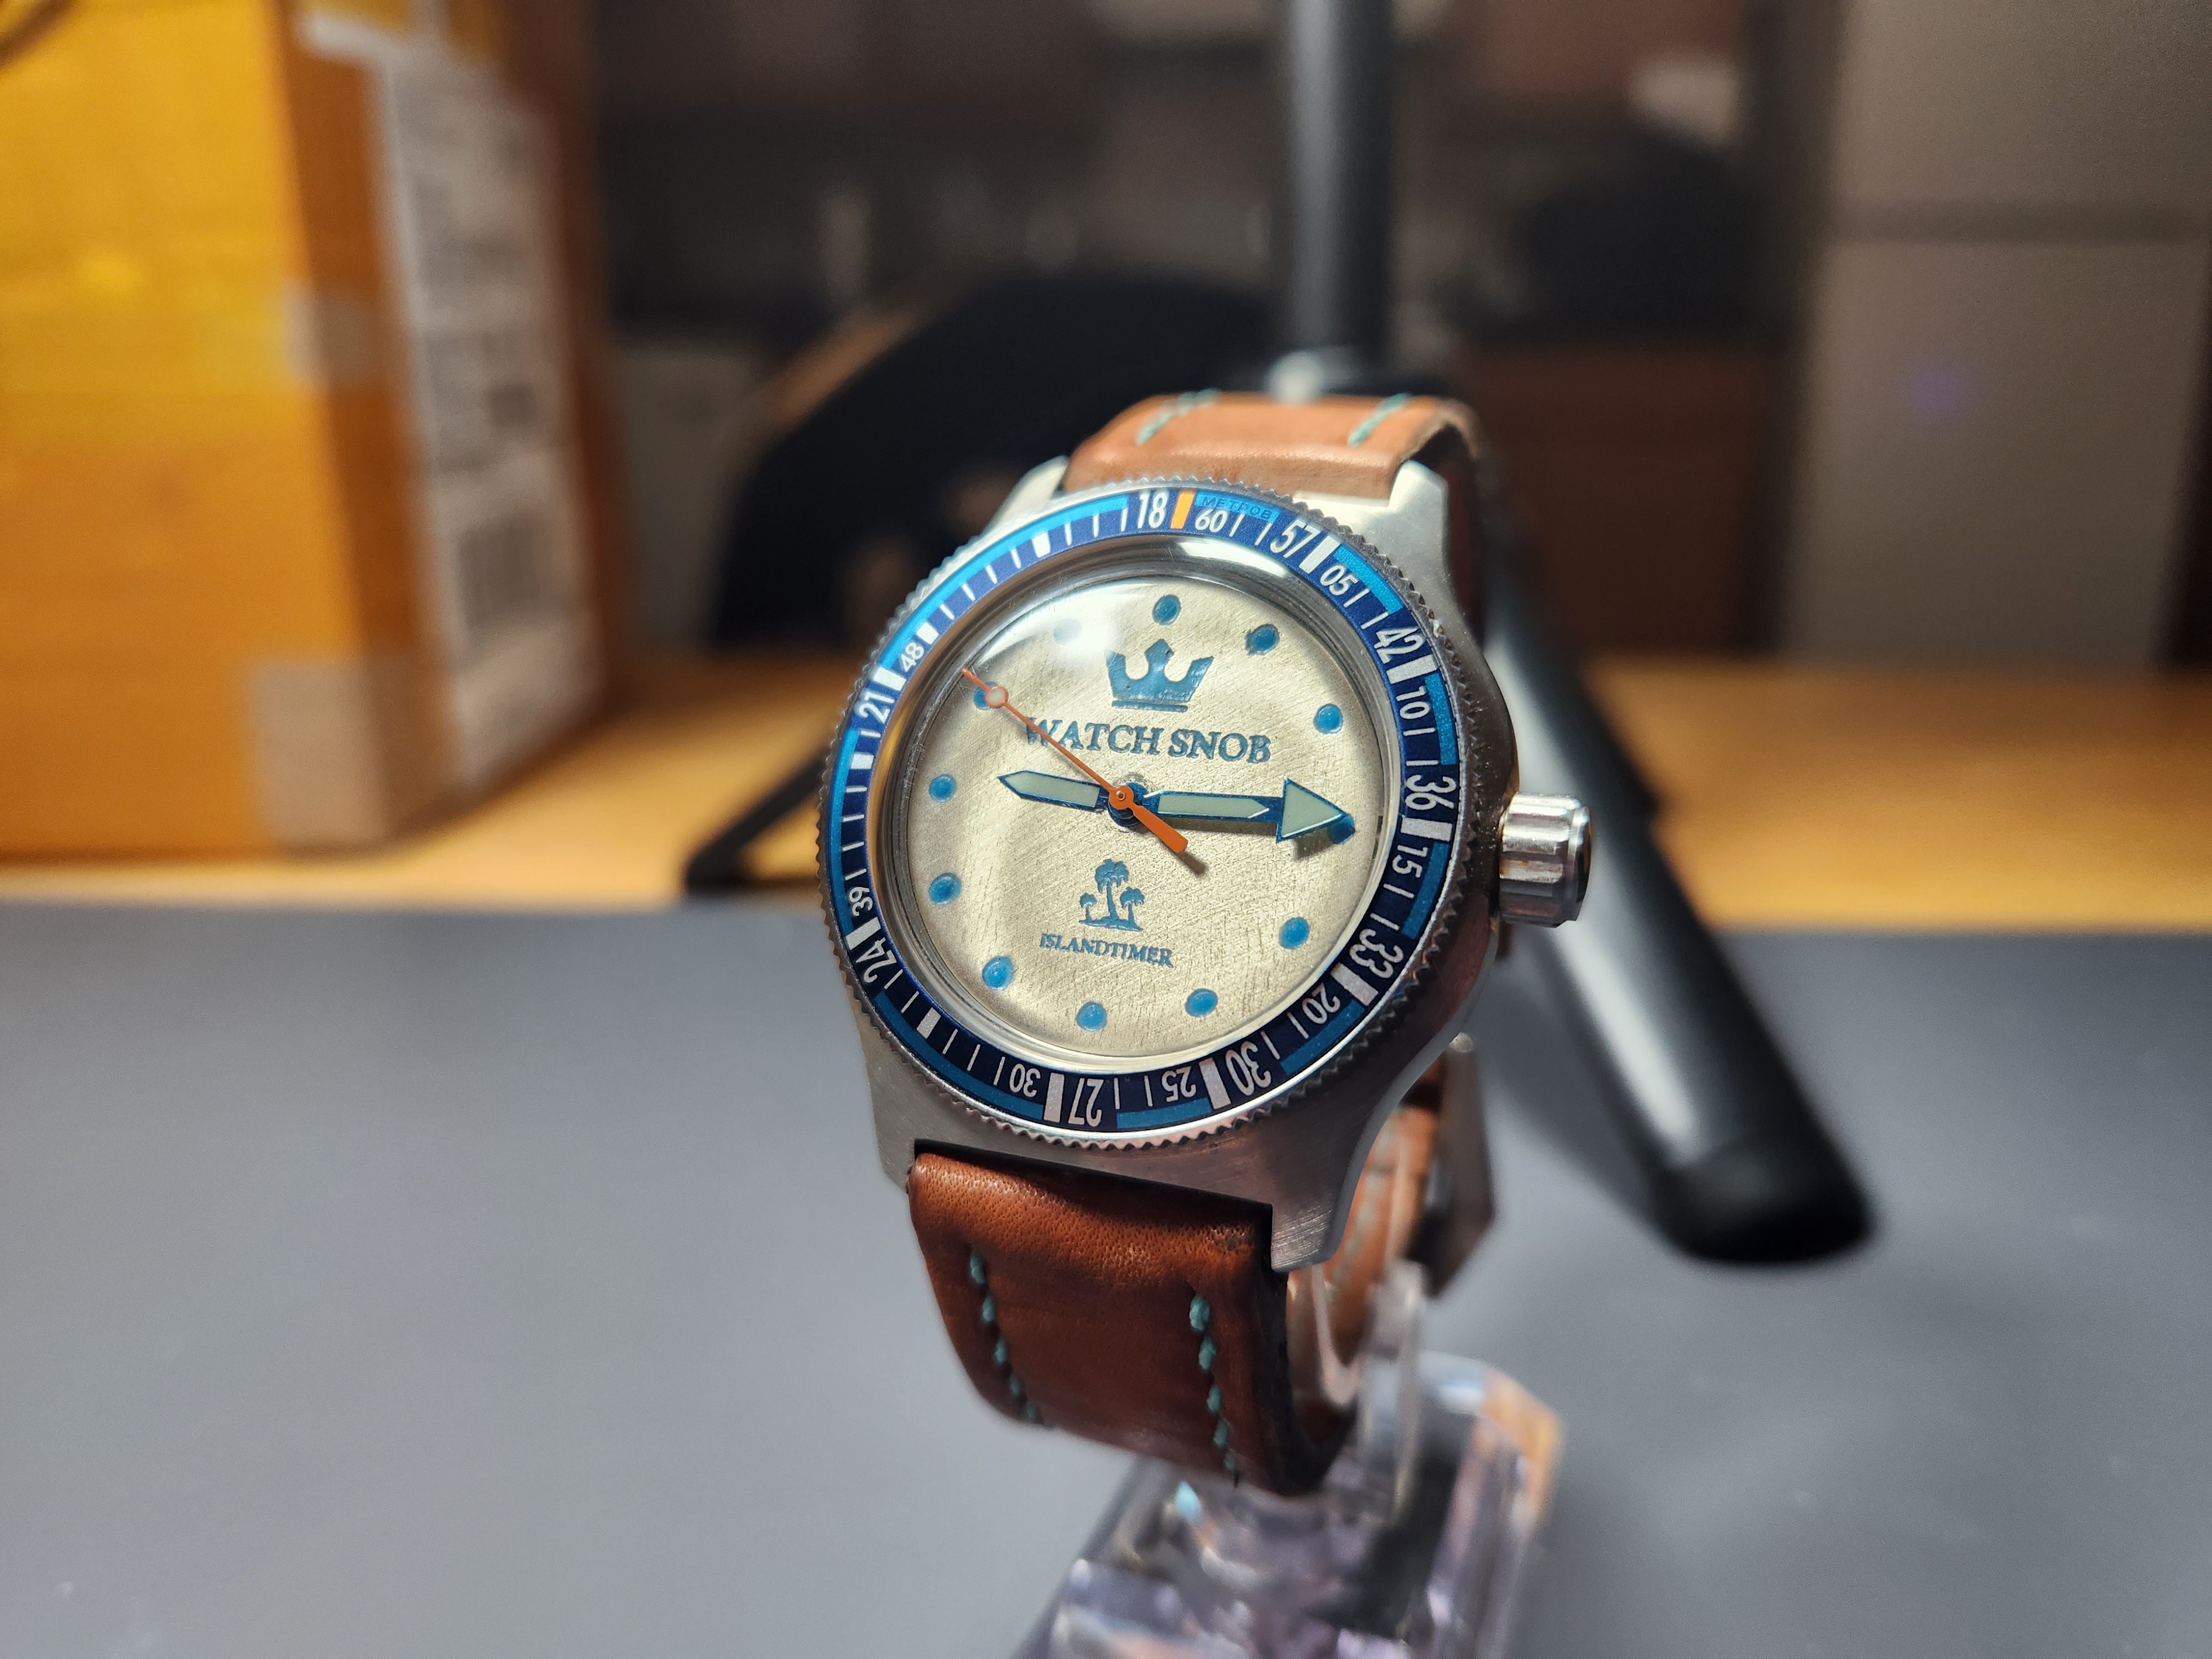 The Watch Snob - Island Timer 001 Custom Watch for Men